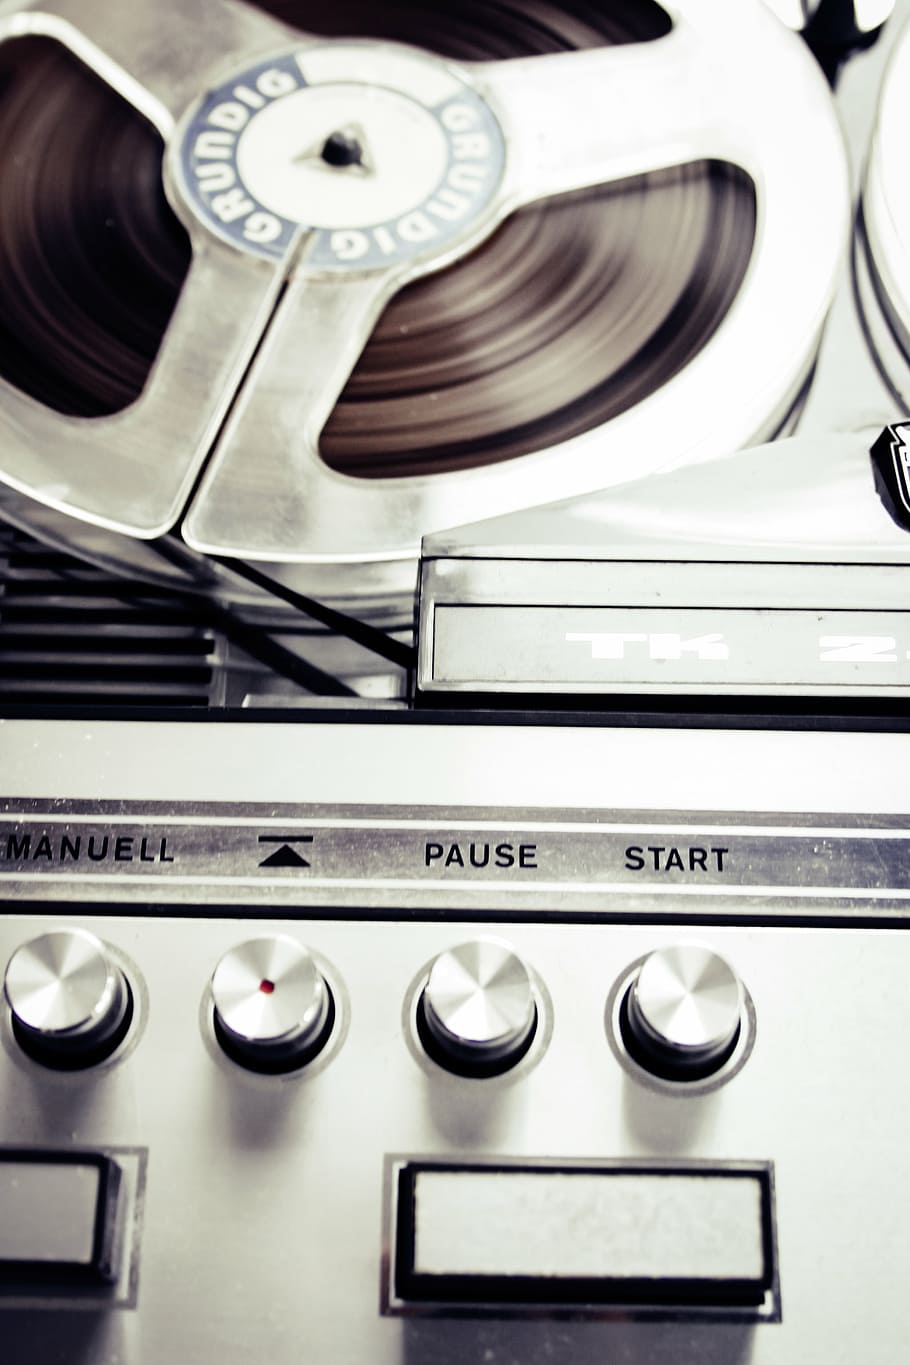 gray cassette player, pause, star, knob, technology, audio, record, player, vinyl, vintage